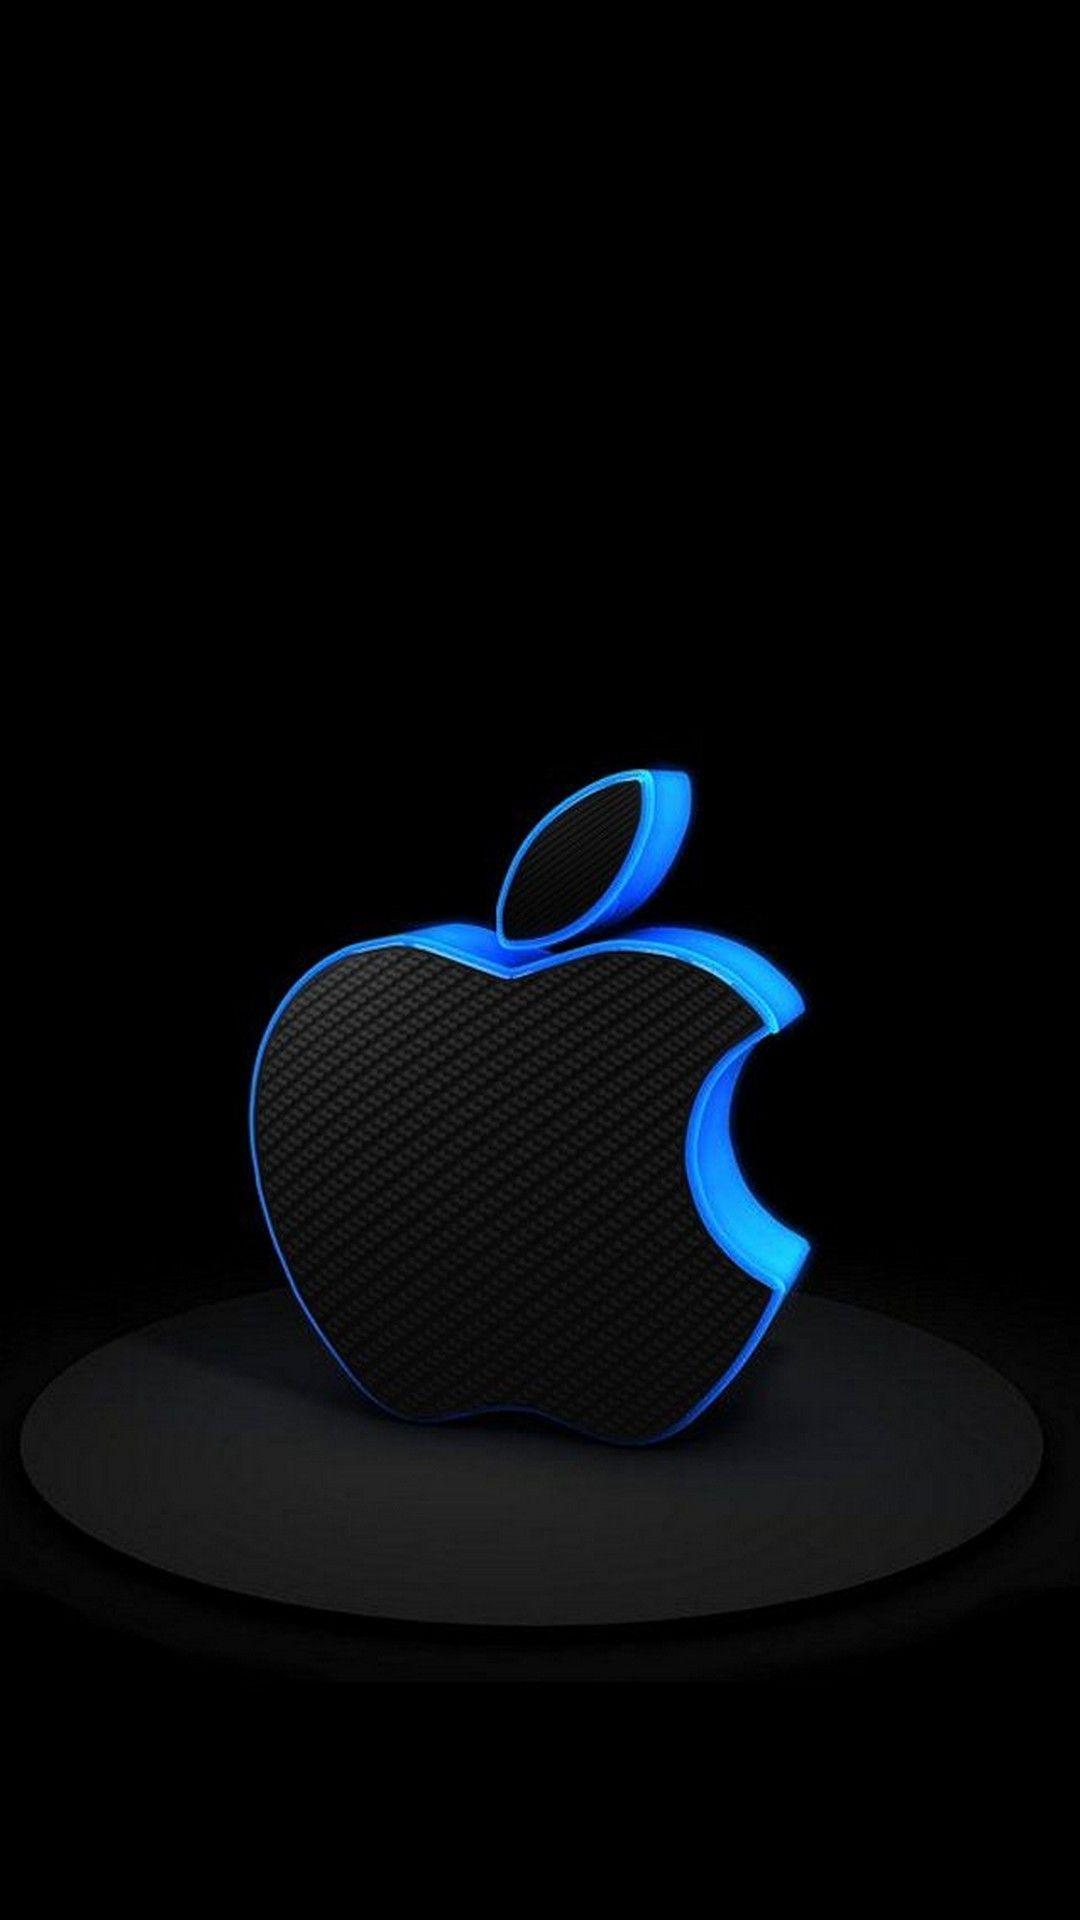 3D iPhone Logo Wallpaper Blue iPhone Wallpaper in 2020